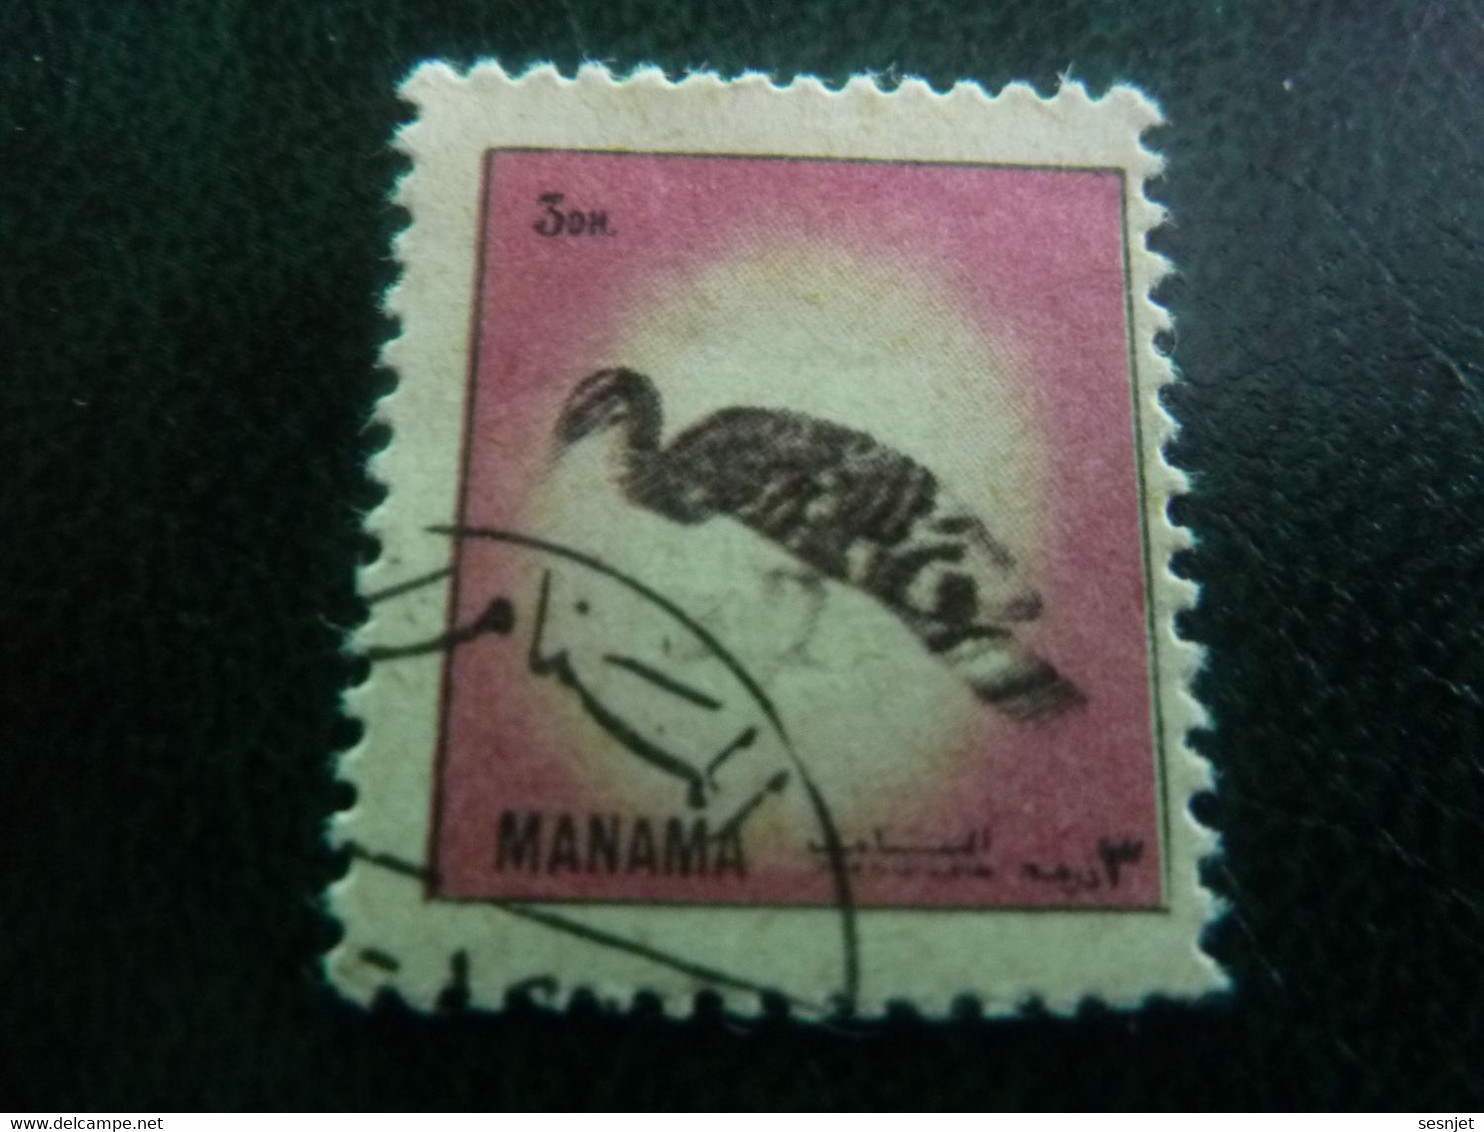 Manama - Qatar - Ile De Bahrein - Paon - Val 3 Dh - Rose - Oblitéré - Année 1972 - - Peacocks